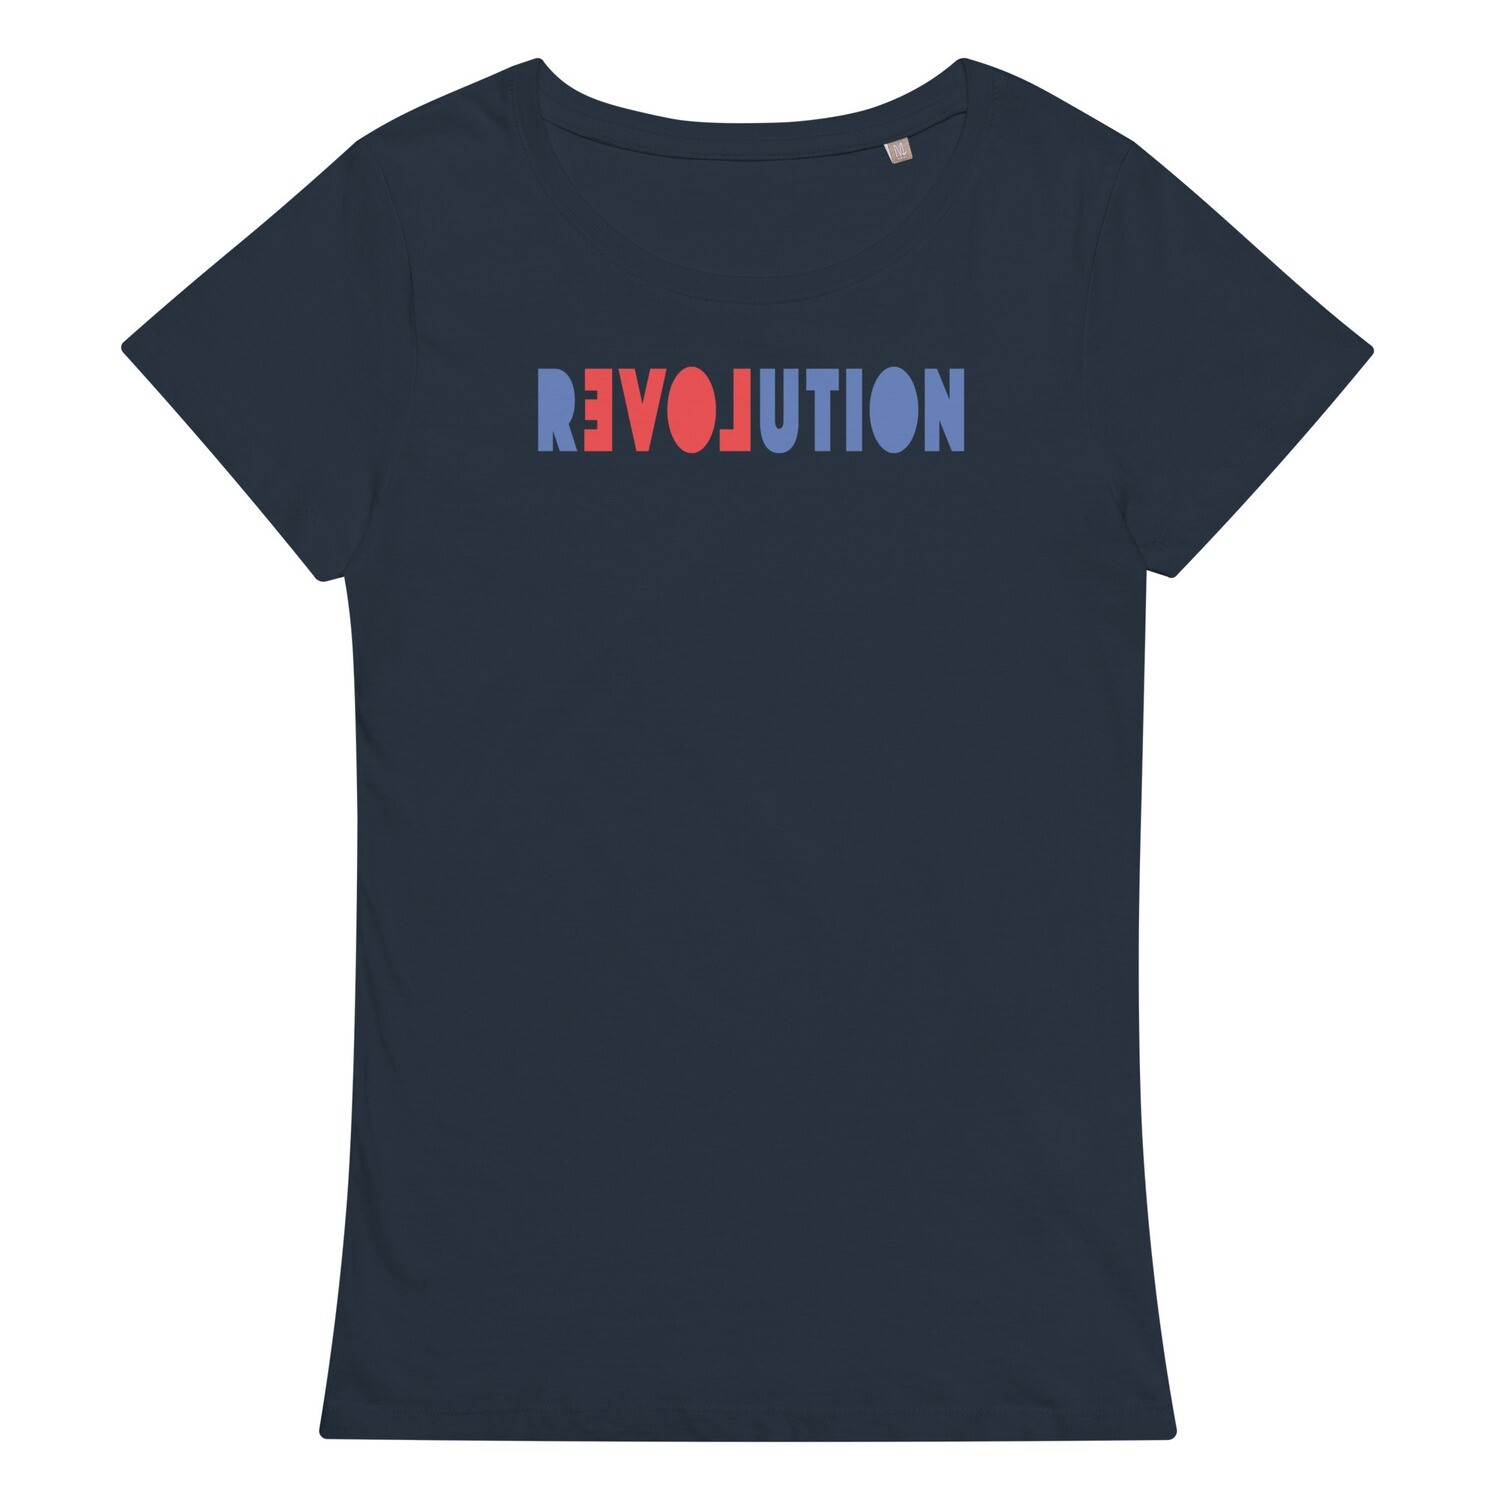 Revolution is LOVE, Women’s basic organic t-shirt